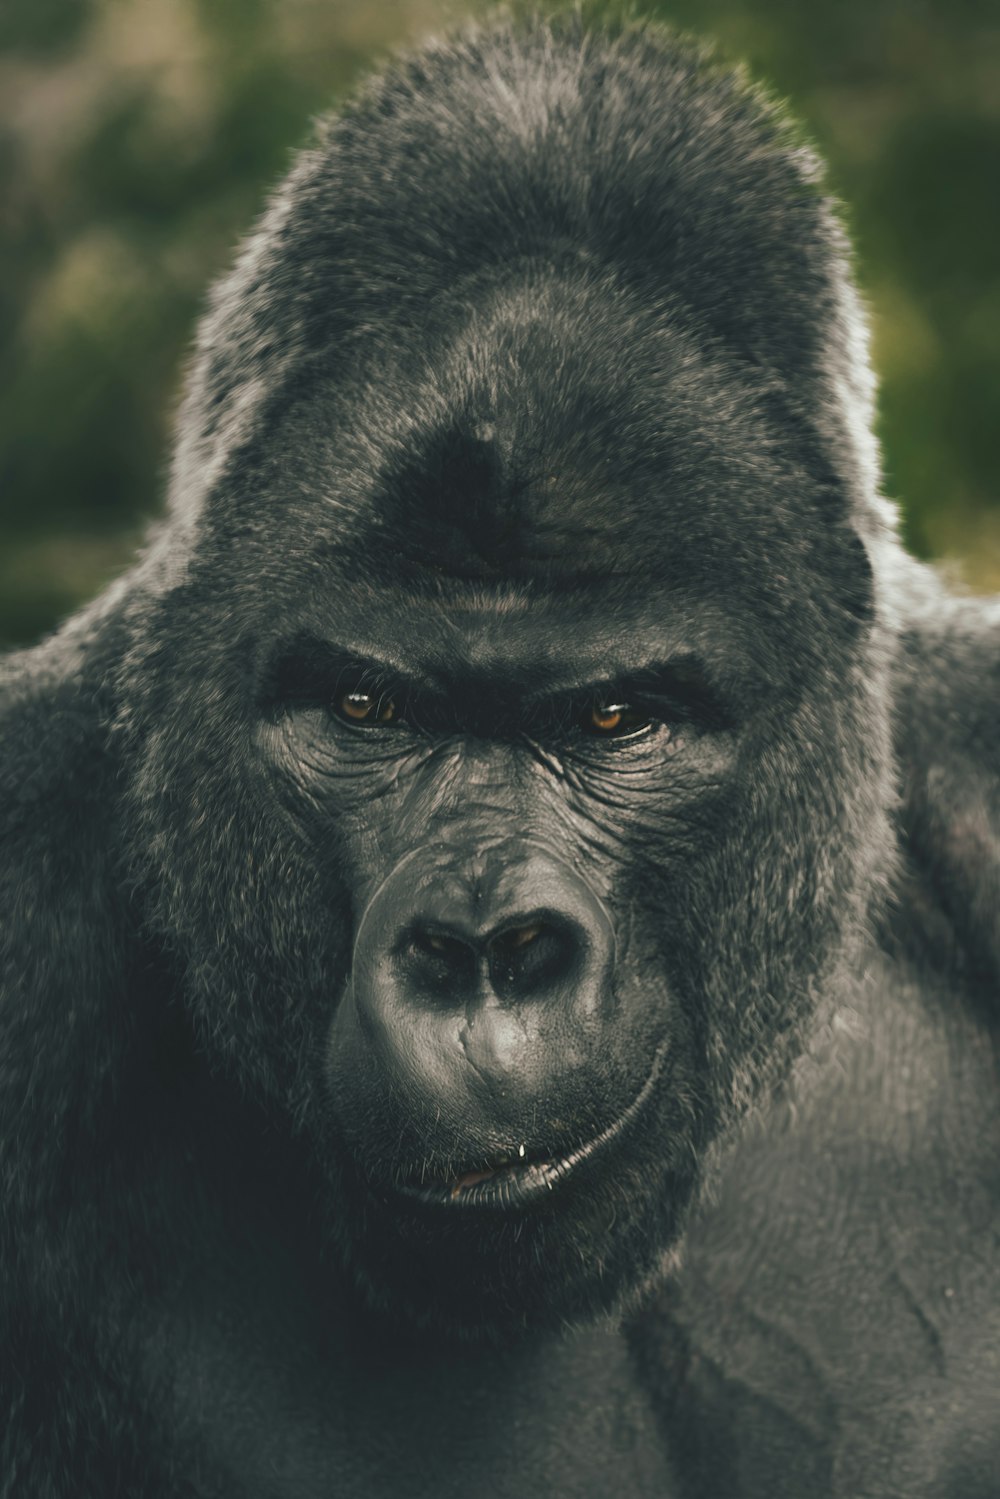 a close up of a gorilla looking at the camera